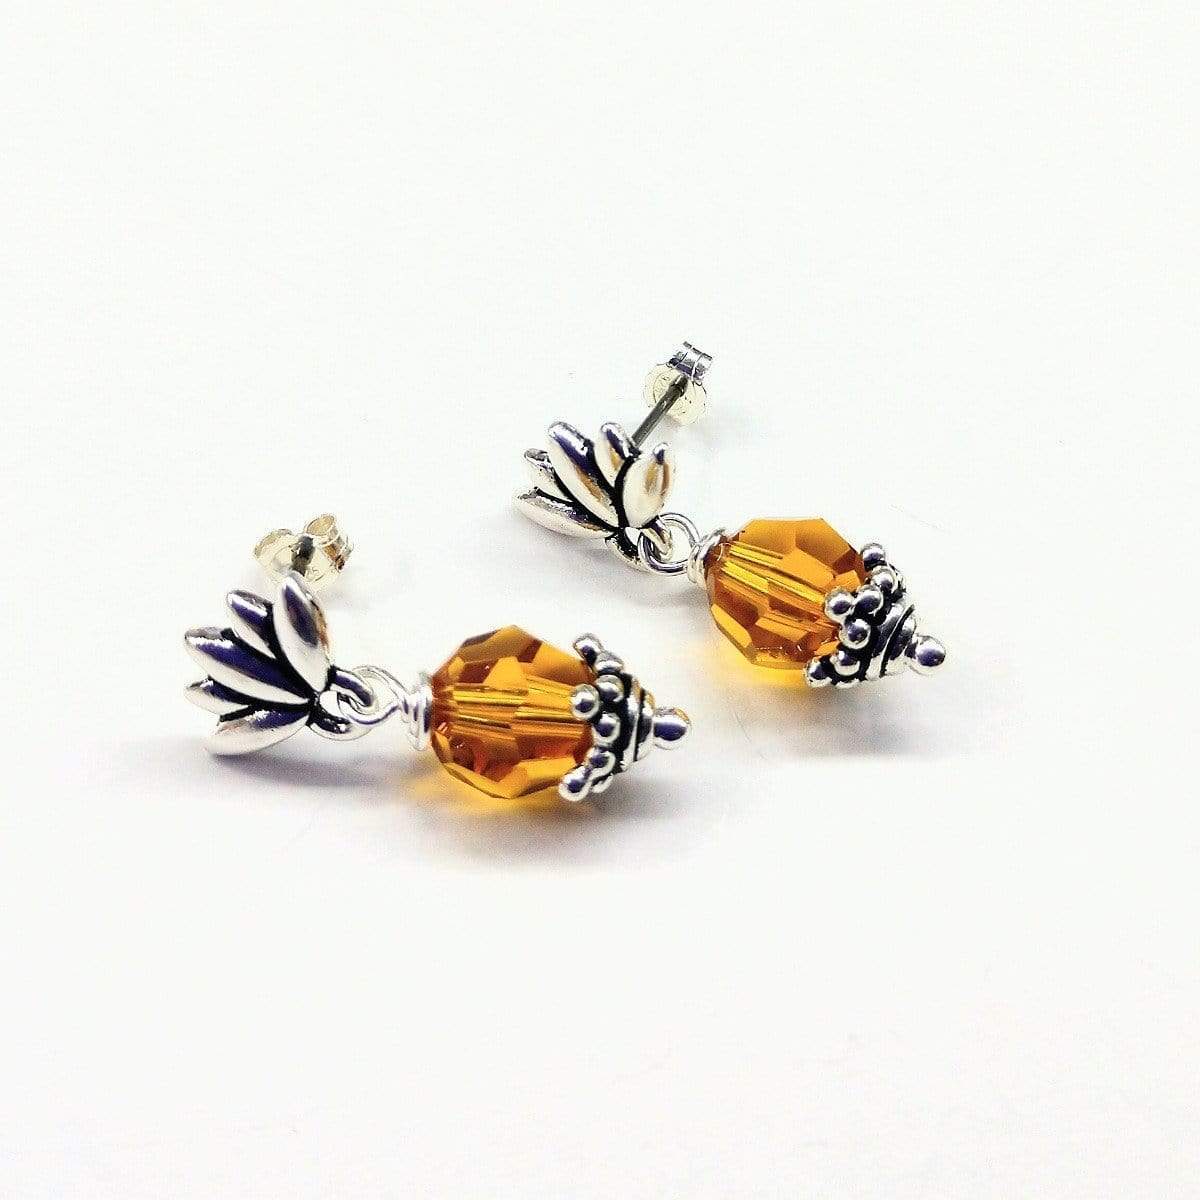 Handmade Crystal Pineapple Earrings with Topaz Swarovski Crystal and Silver Components - Earrings - Bijou Her -  -  - 